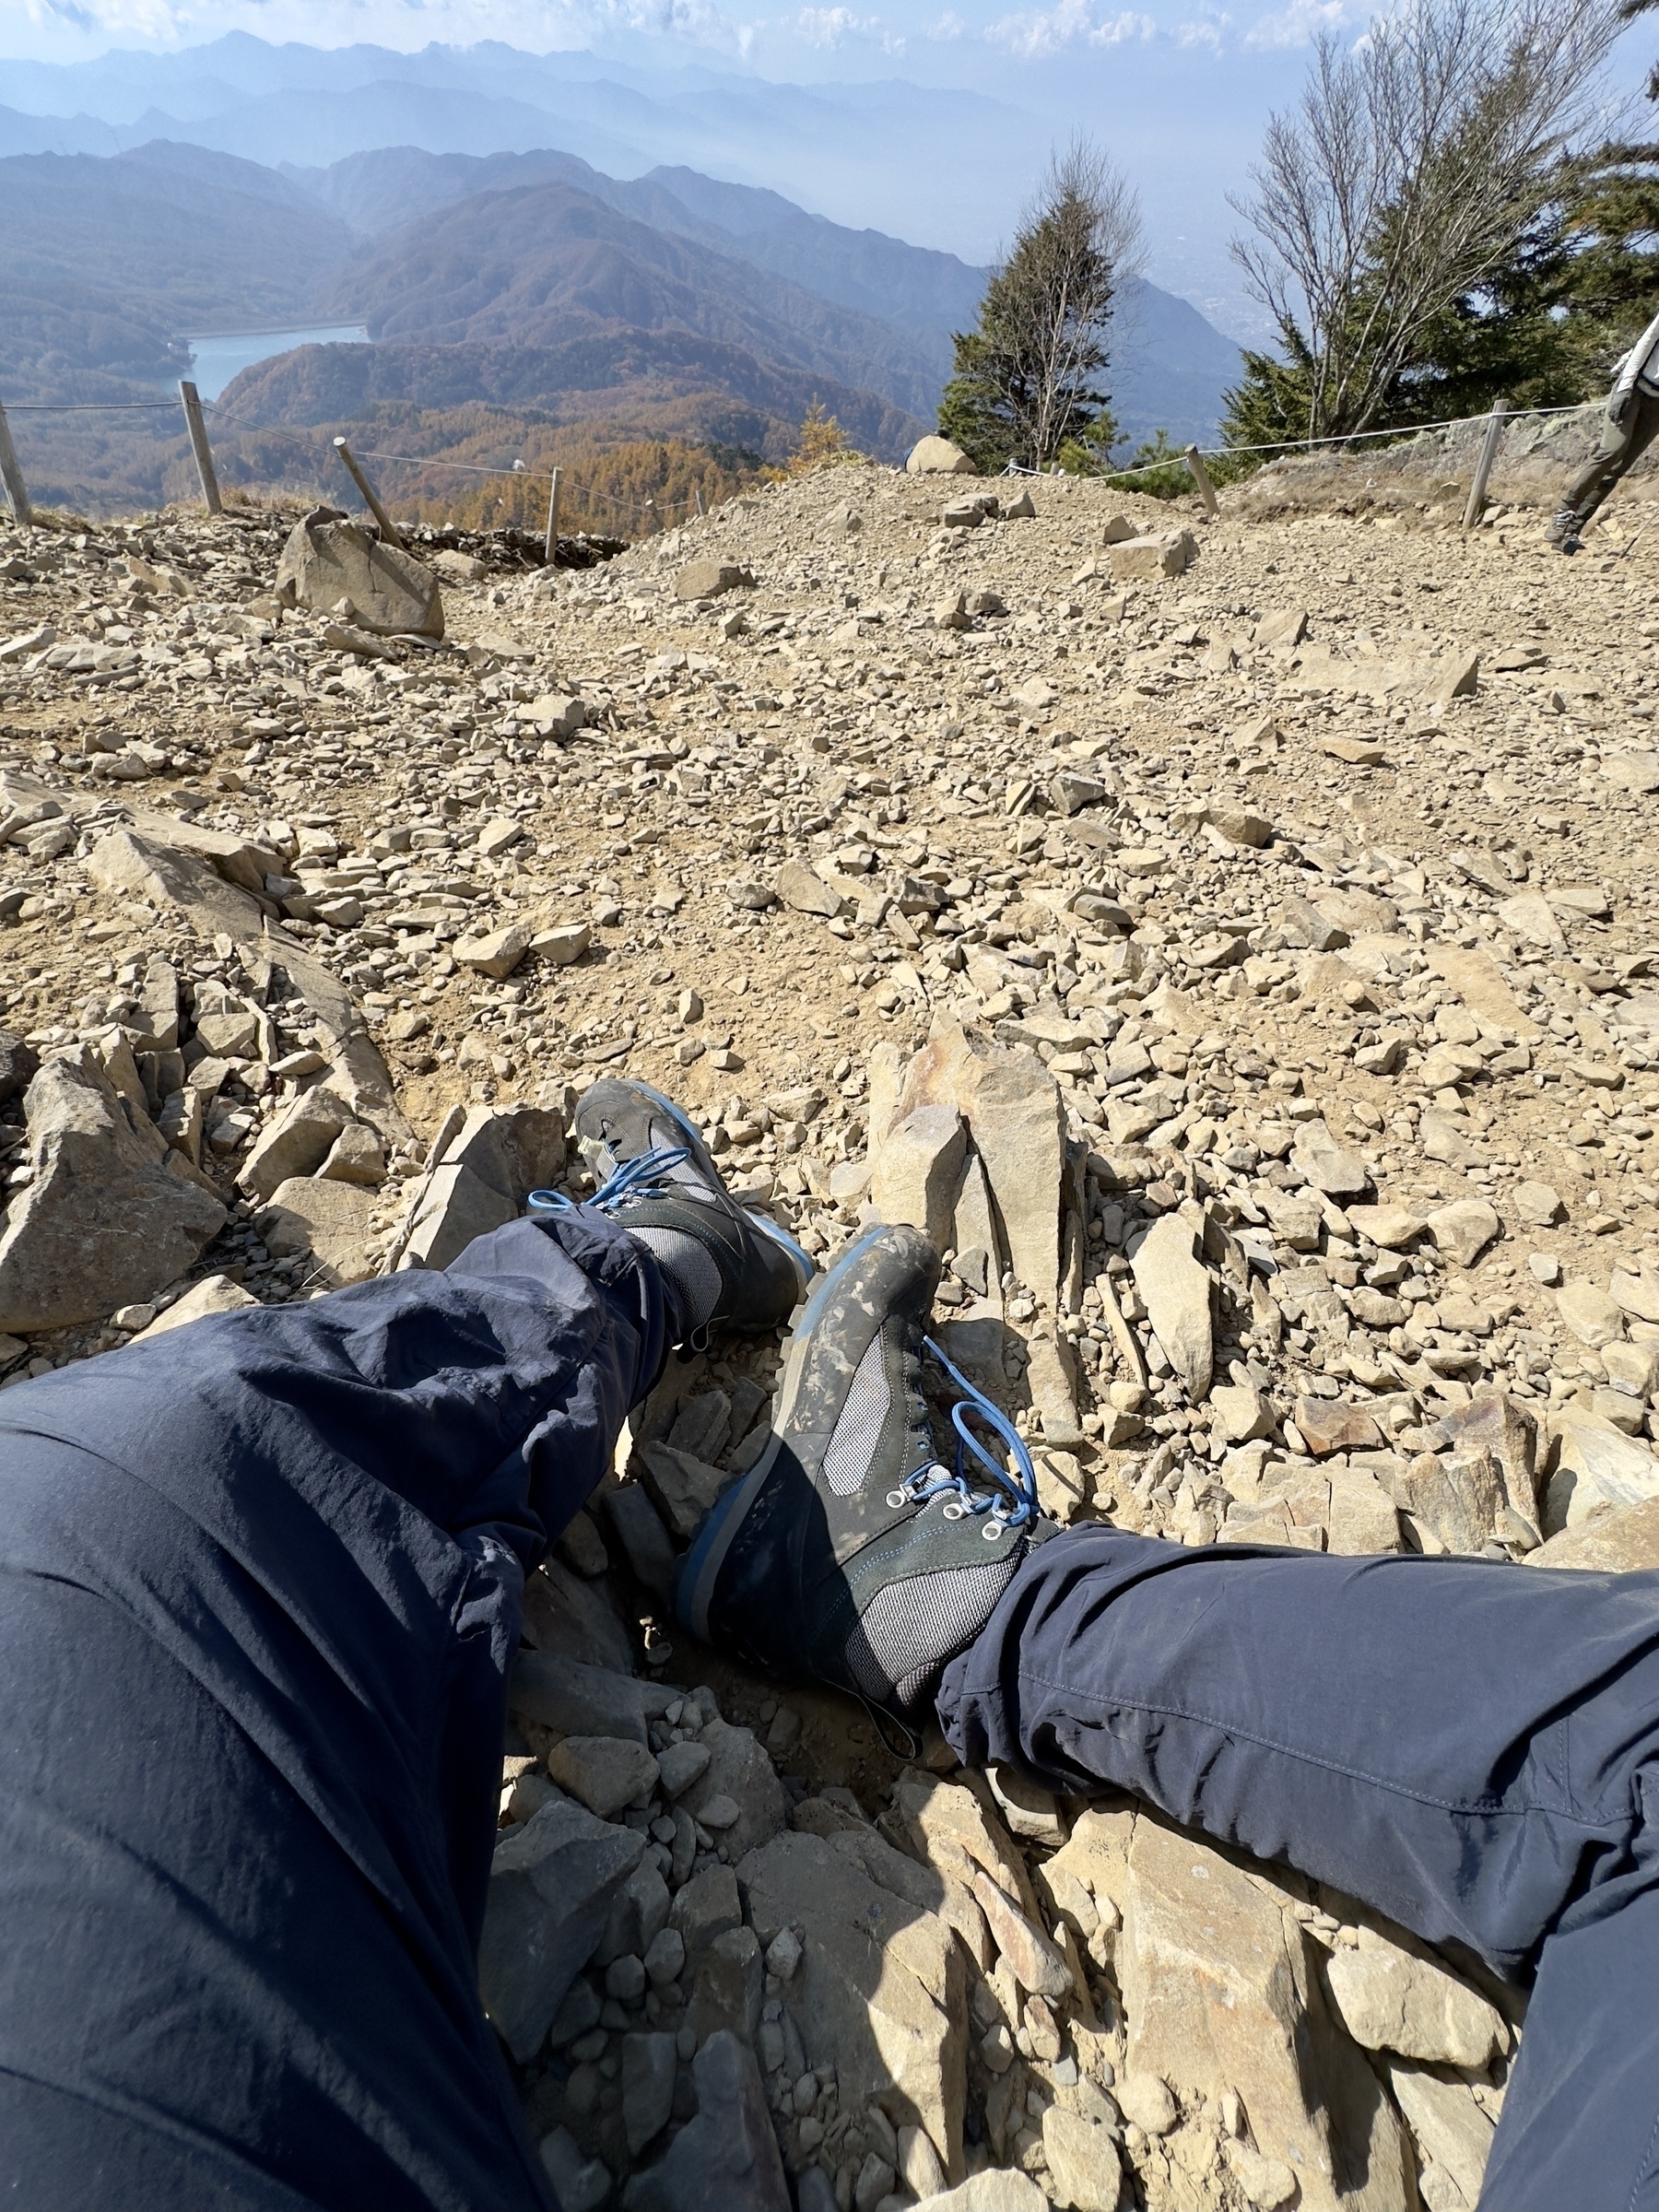 Man’s legs and rocky surface of area near summit of Mt. Daibosatsu.